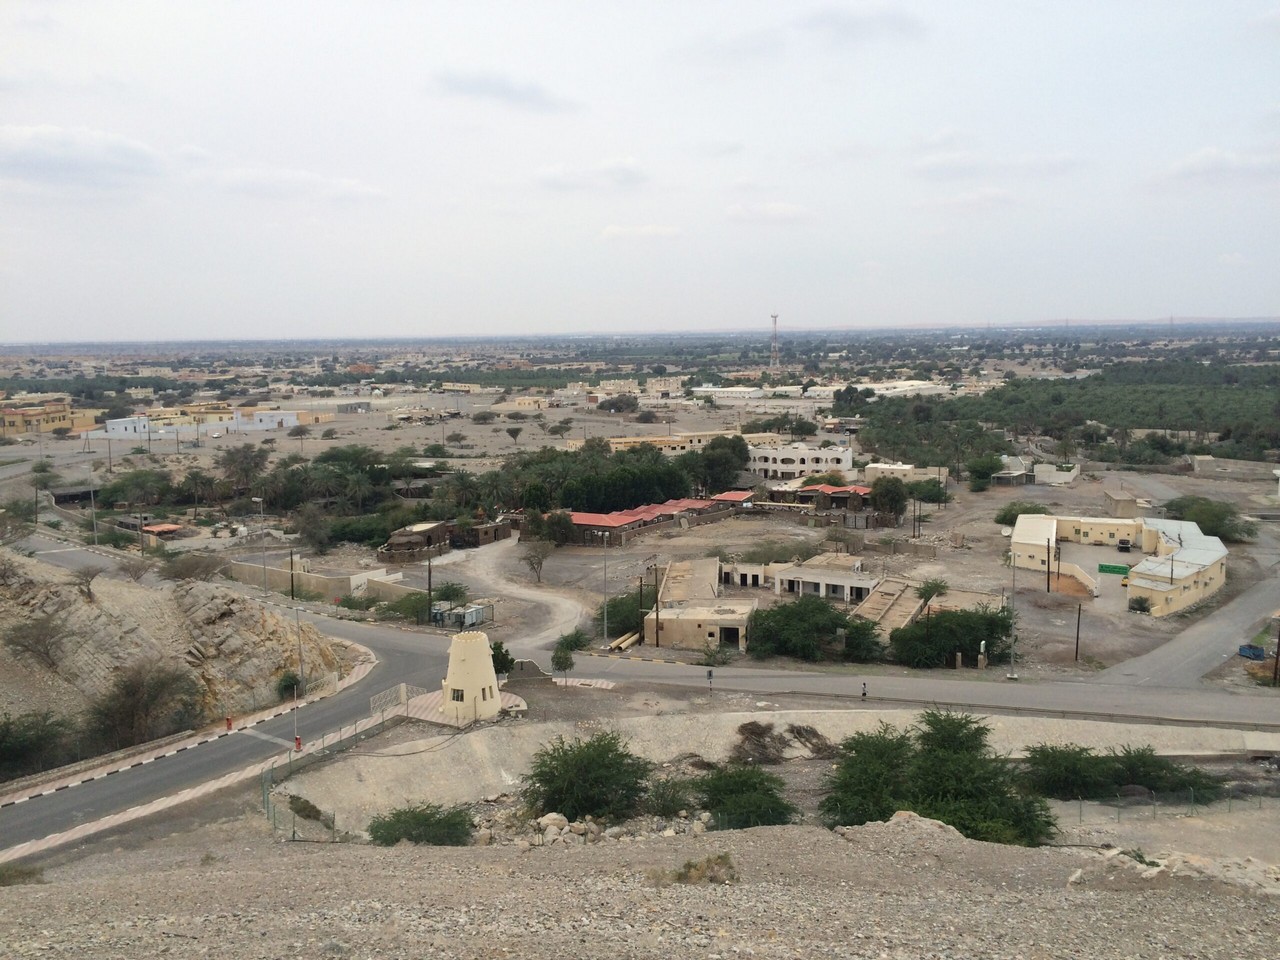 View of Khatt from the Golden Tulip hotel